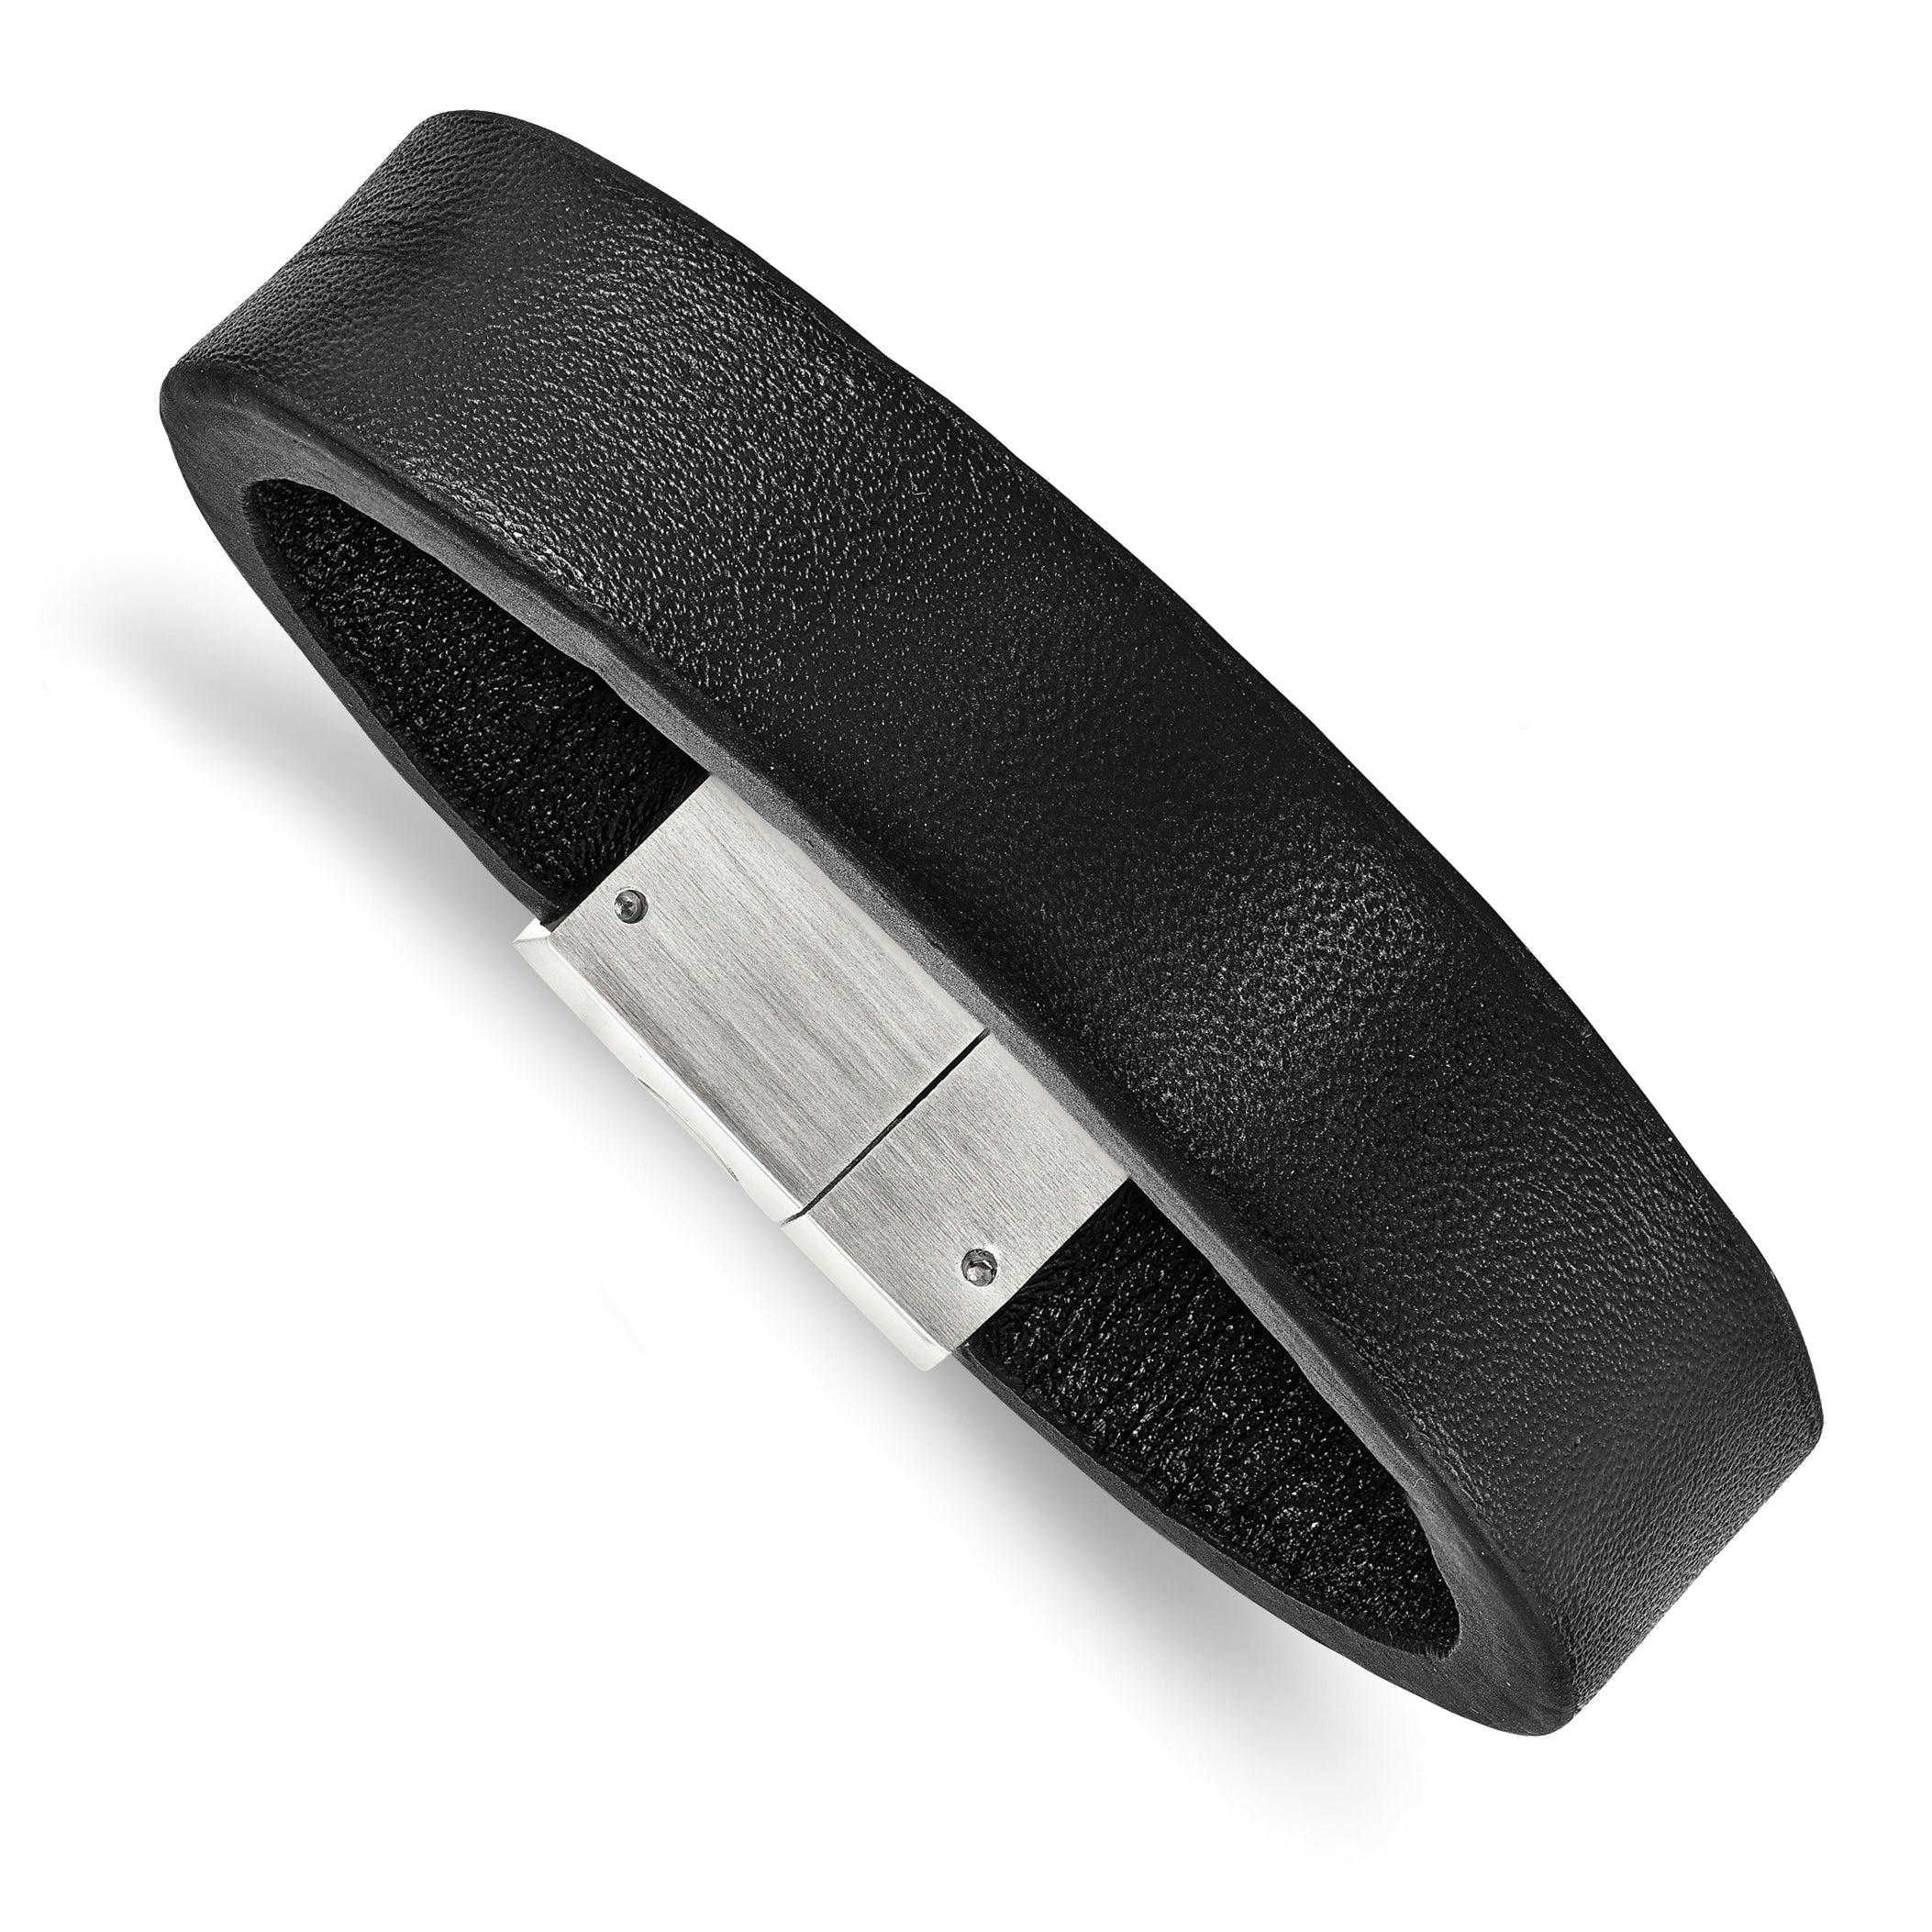 Stainless Steel Polished Black Leather Bracelet